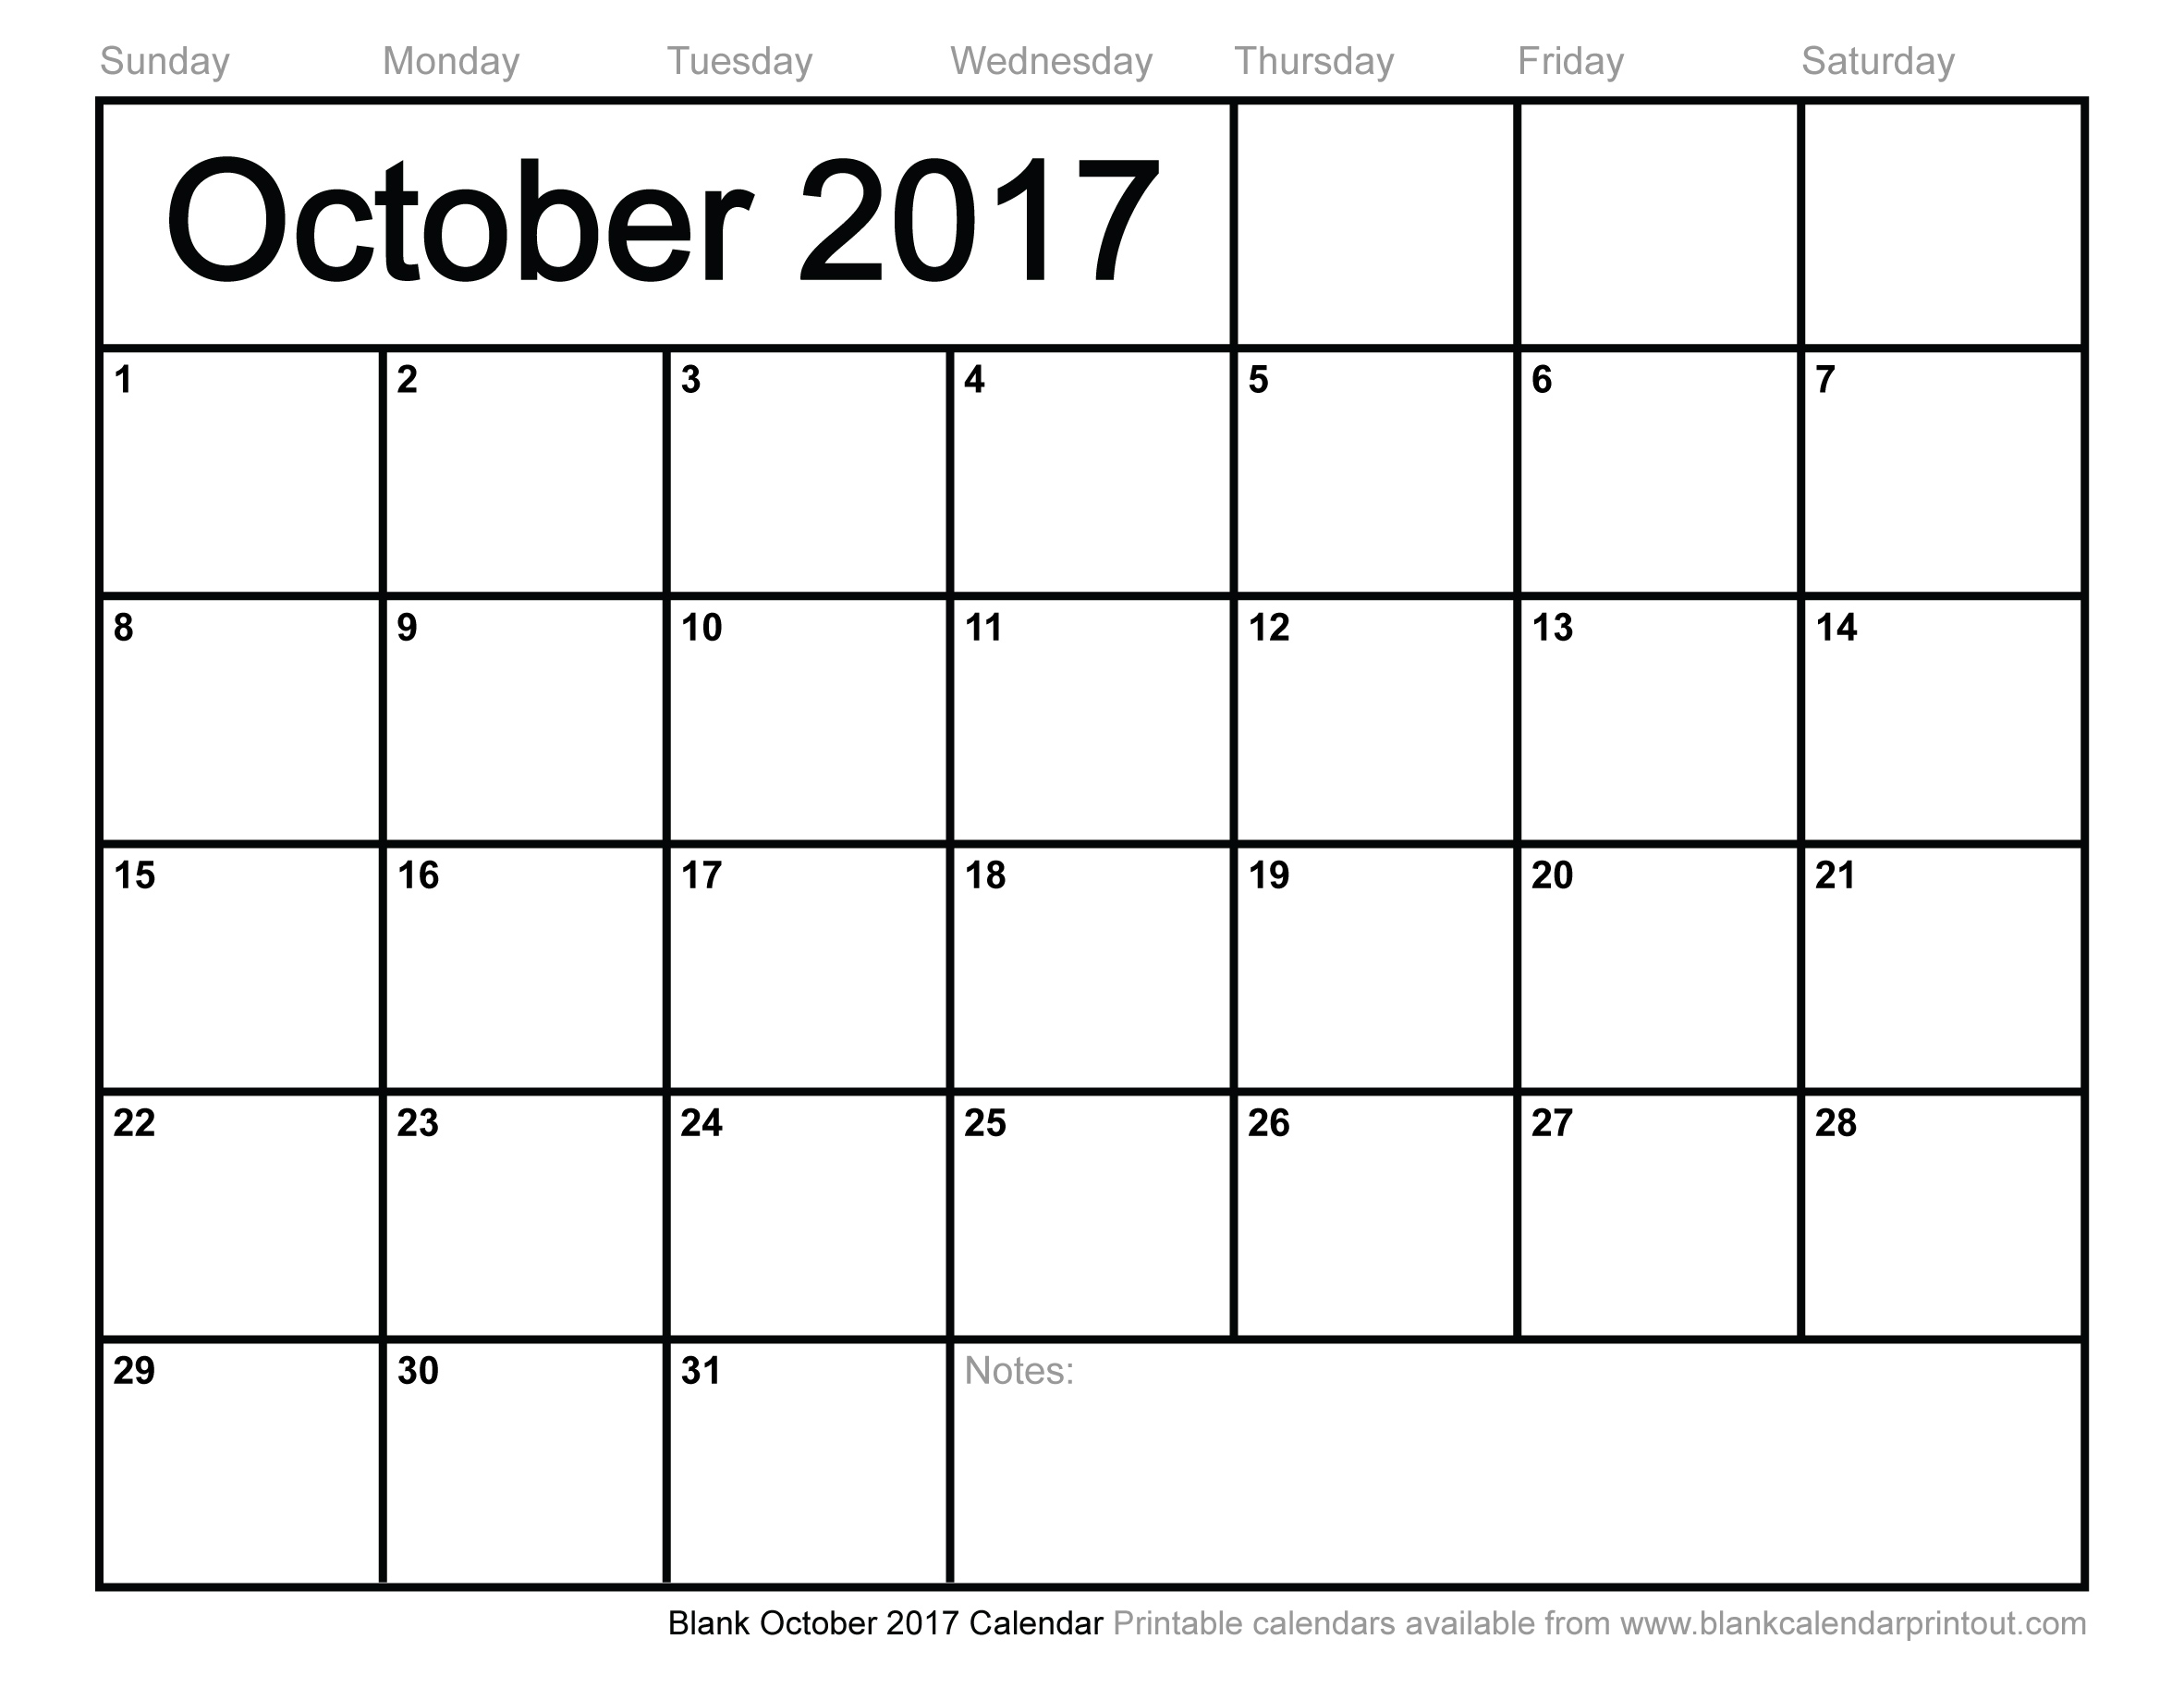 Blank October 2017 Calendar to Print